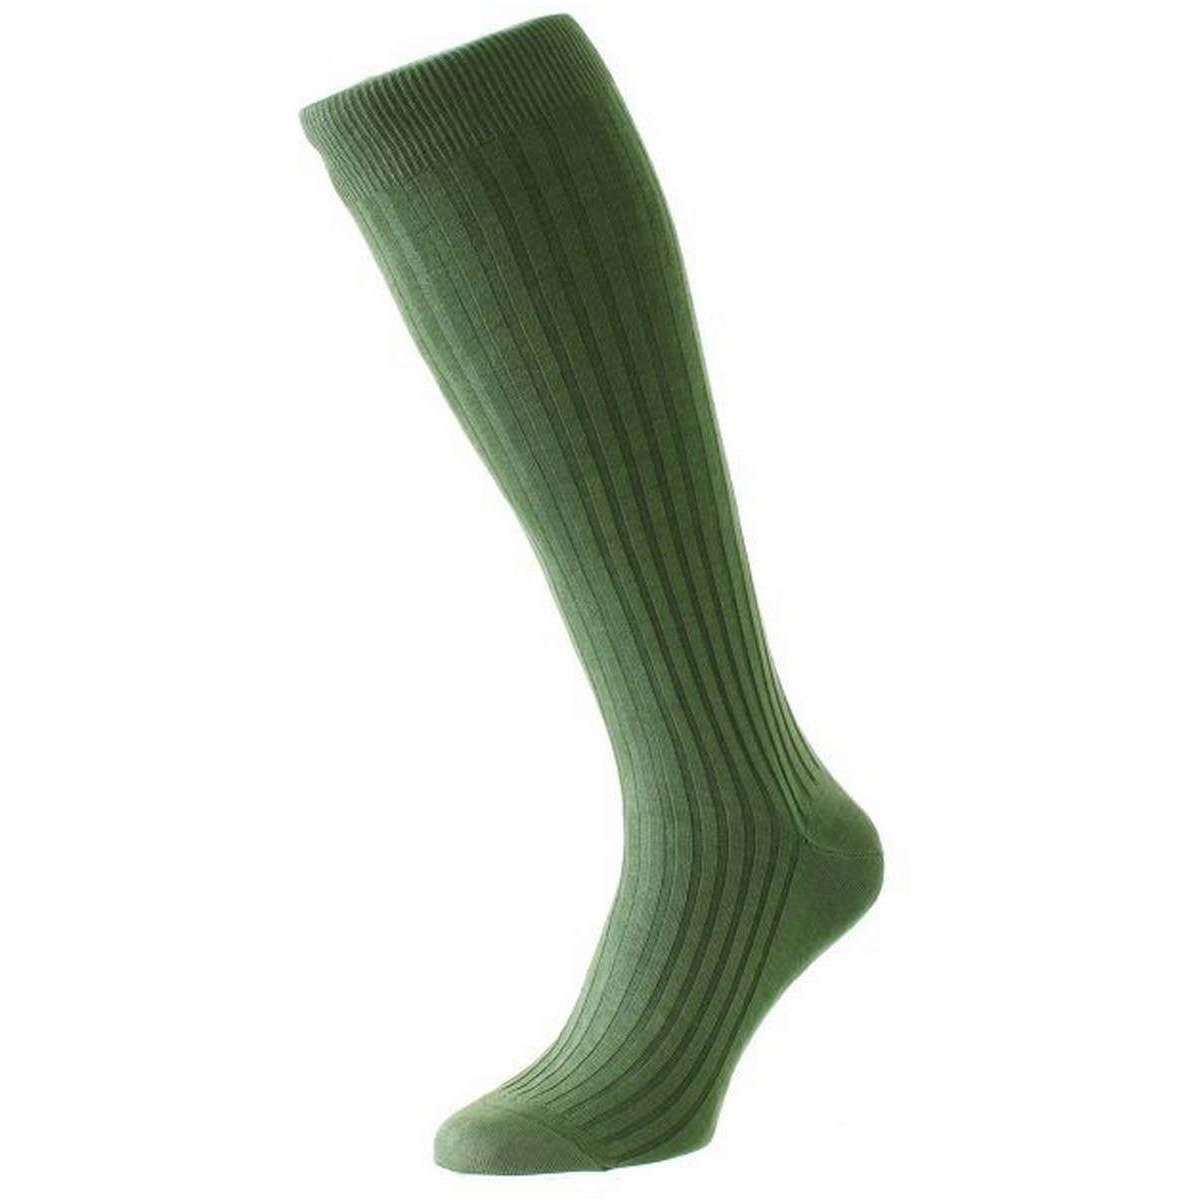 Pantherella Danvers Cotton Fil D’Ecosse Over the Calf Socks - Sage Green